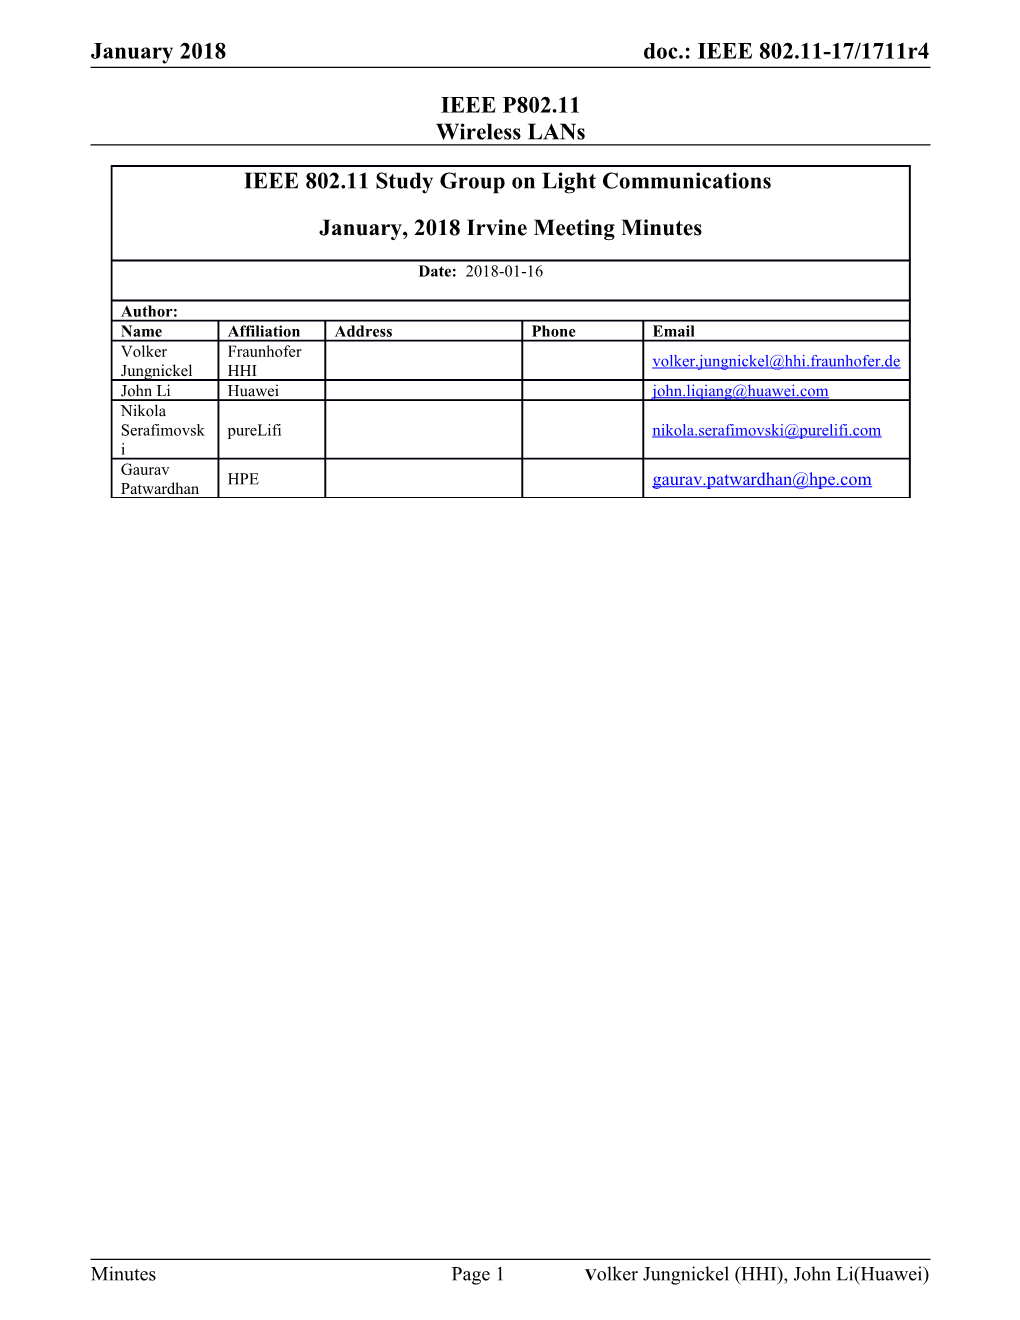 IEEE 802.11 Study Group on Light Communications